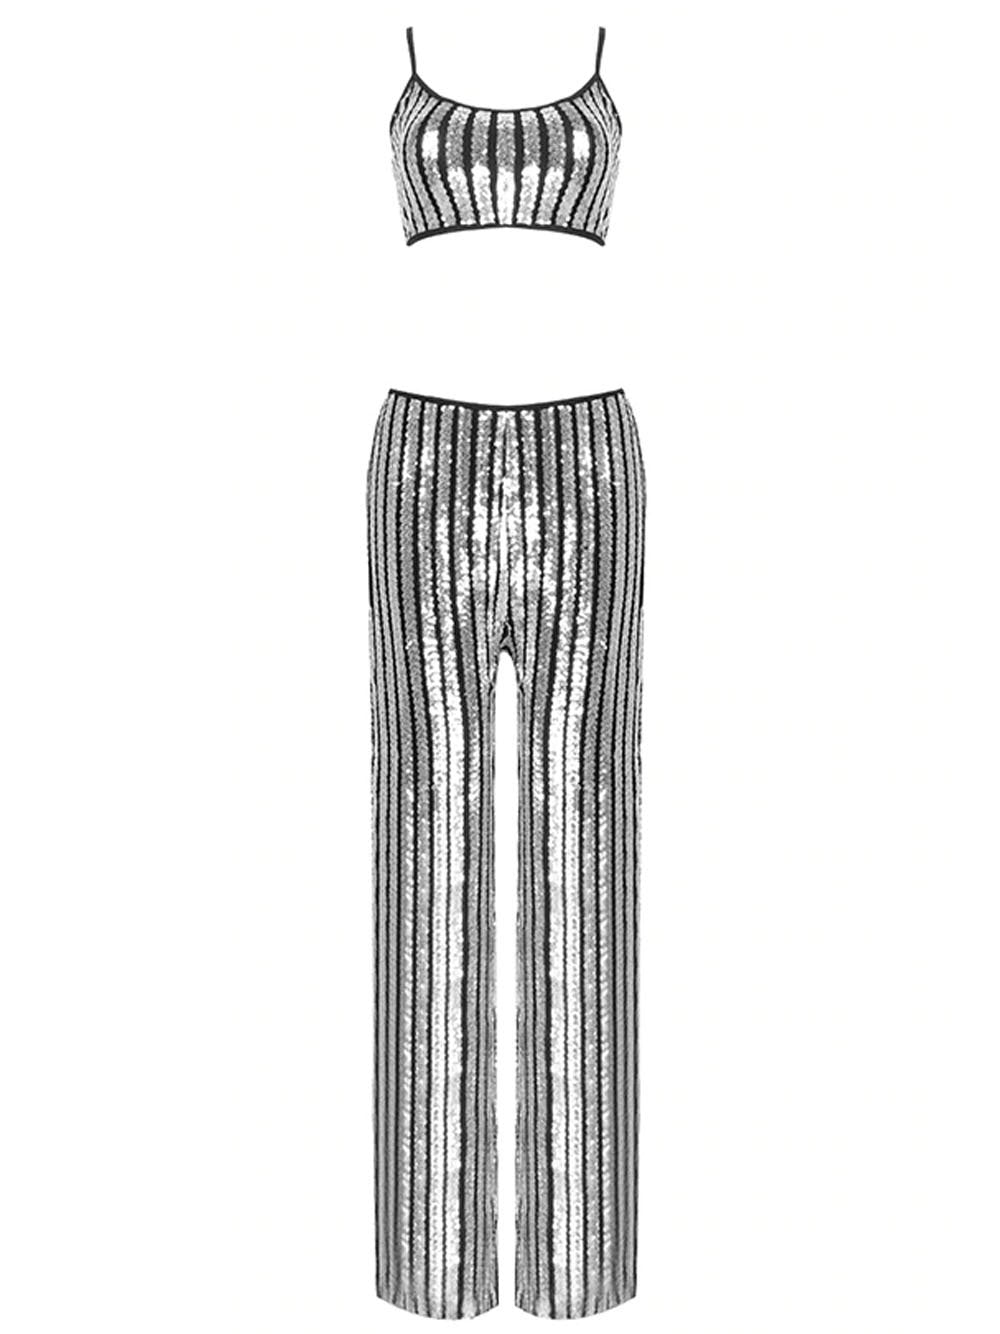 Striped Sequins Top & Pants Set